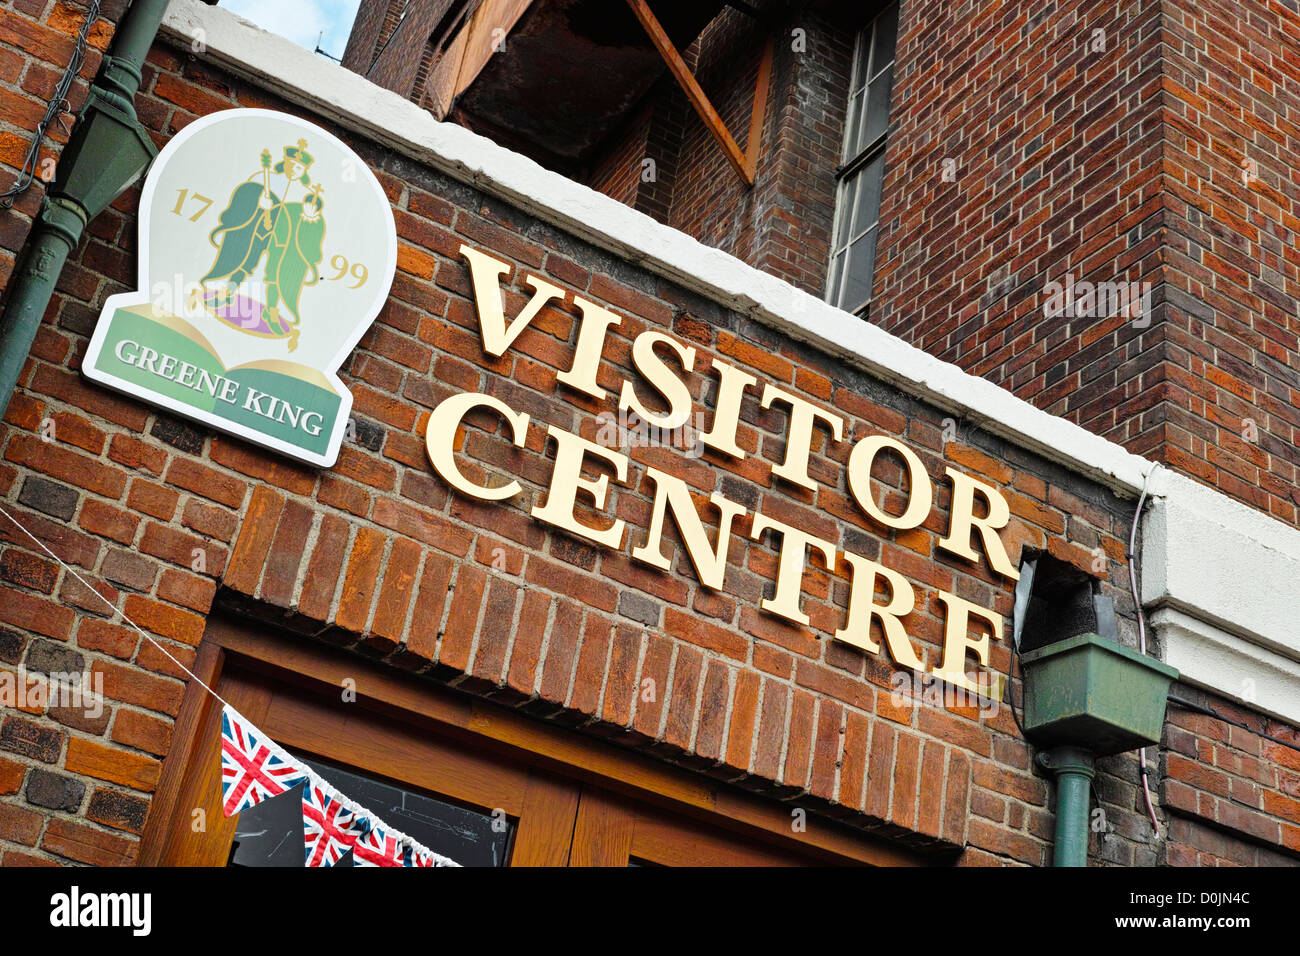 Greene King brewery Vistor Centre. Stock Photo